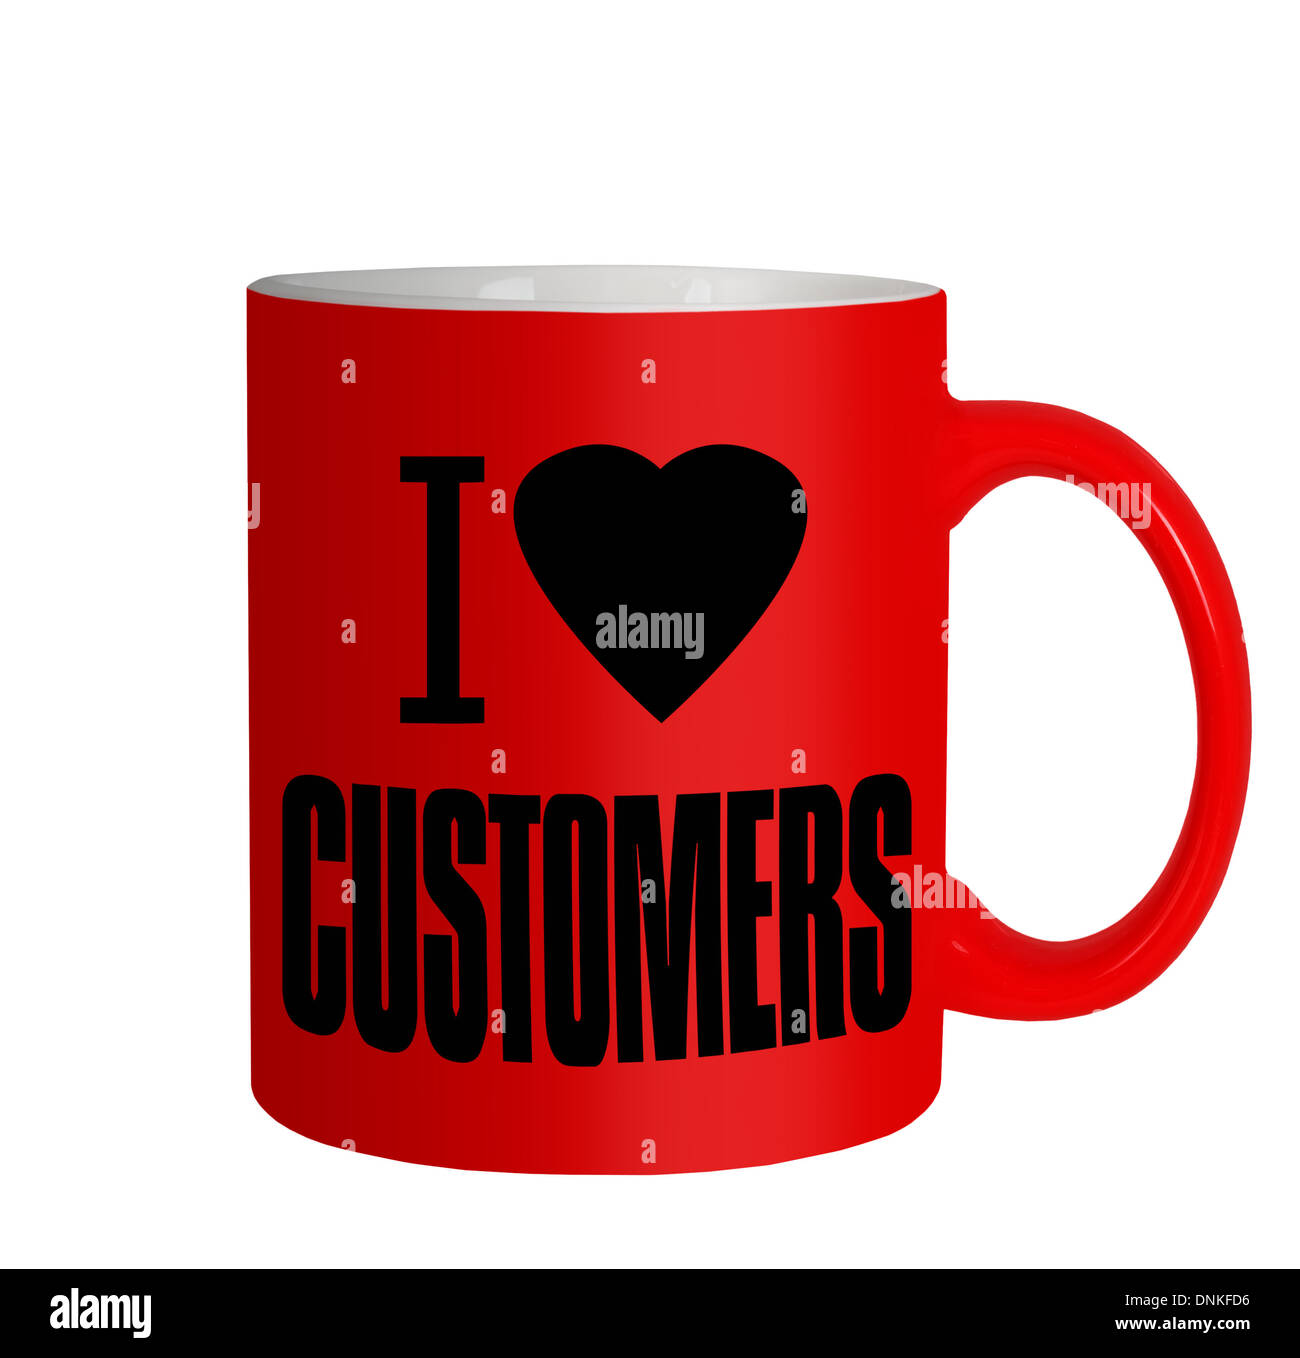 Ideal customer service etc. Stock Photo